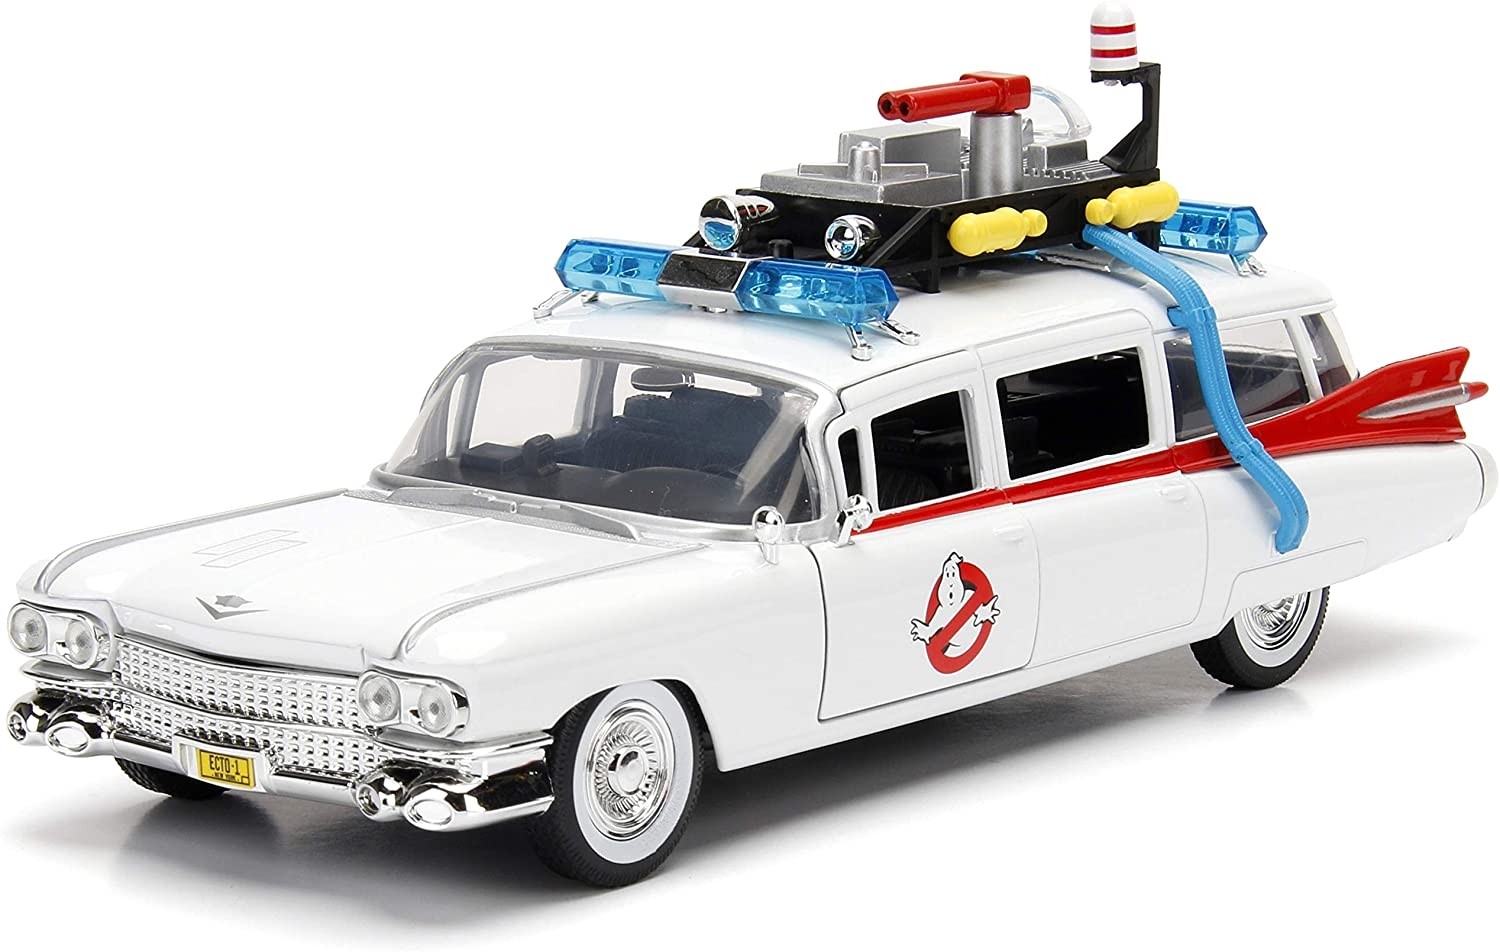 Cadillac Ghostbuster Ecto 1 1959 Jada Toys